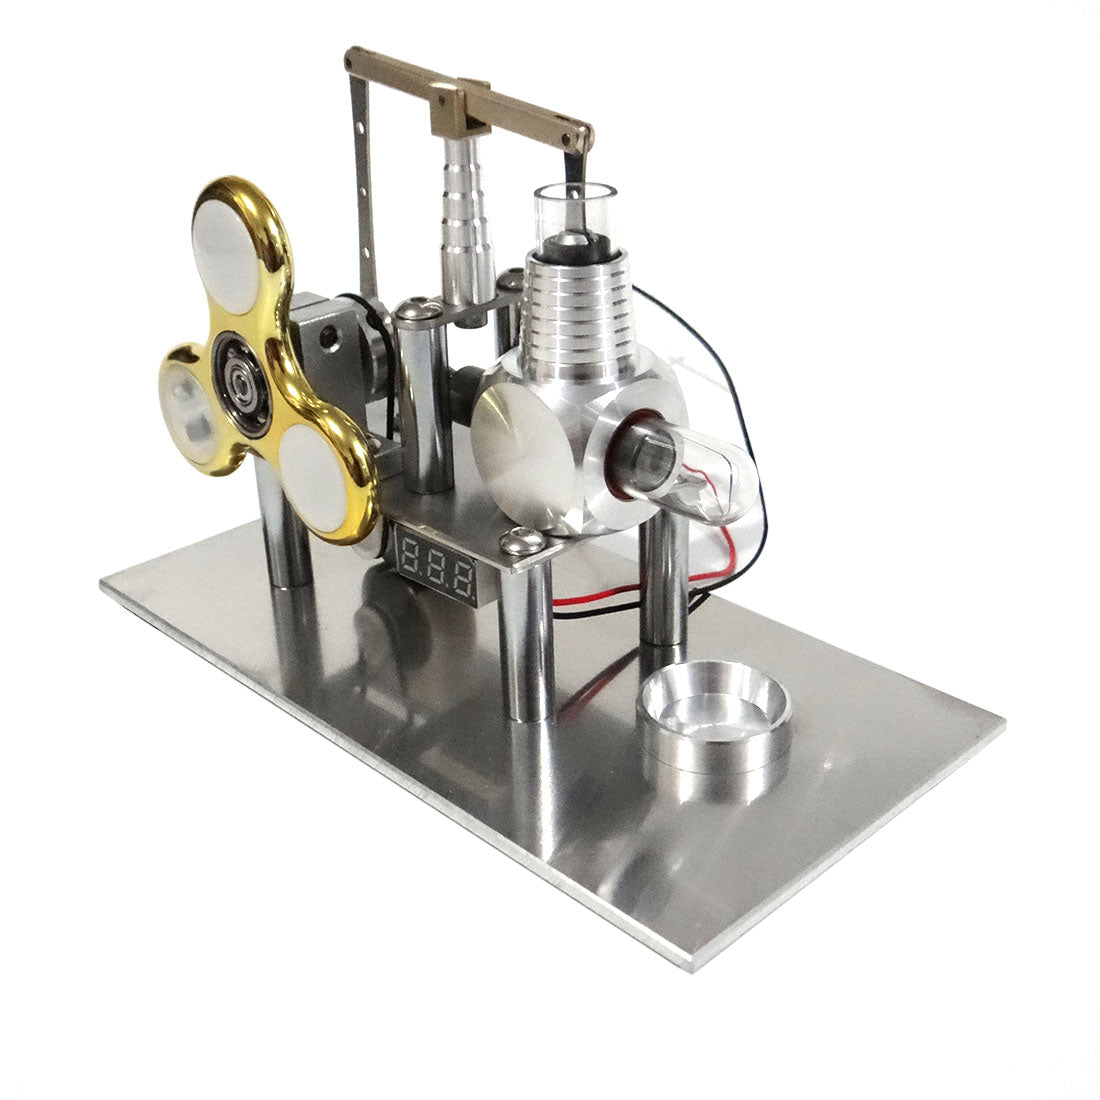 Stirling Engine Generator with Luminous Gyroscope Bulb Voltage Display Meter Science Experiment Engine - Balance Type - enginediy